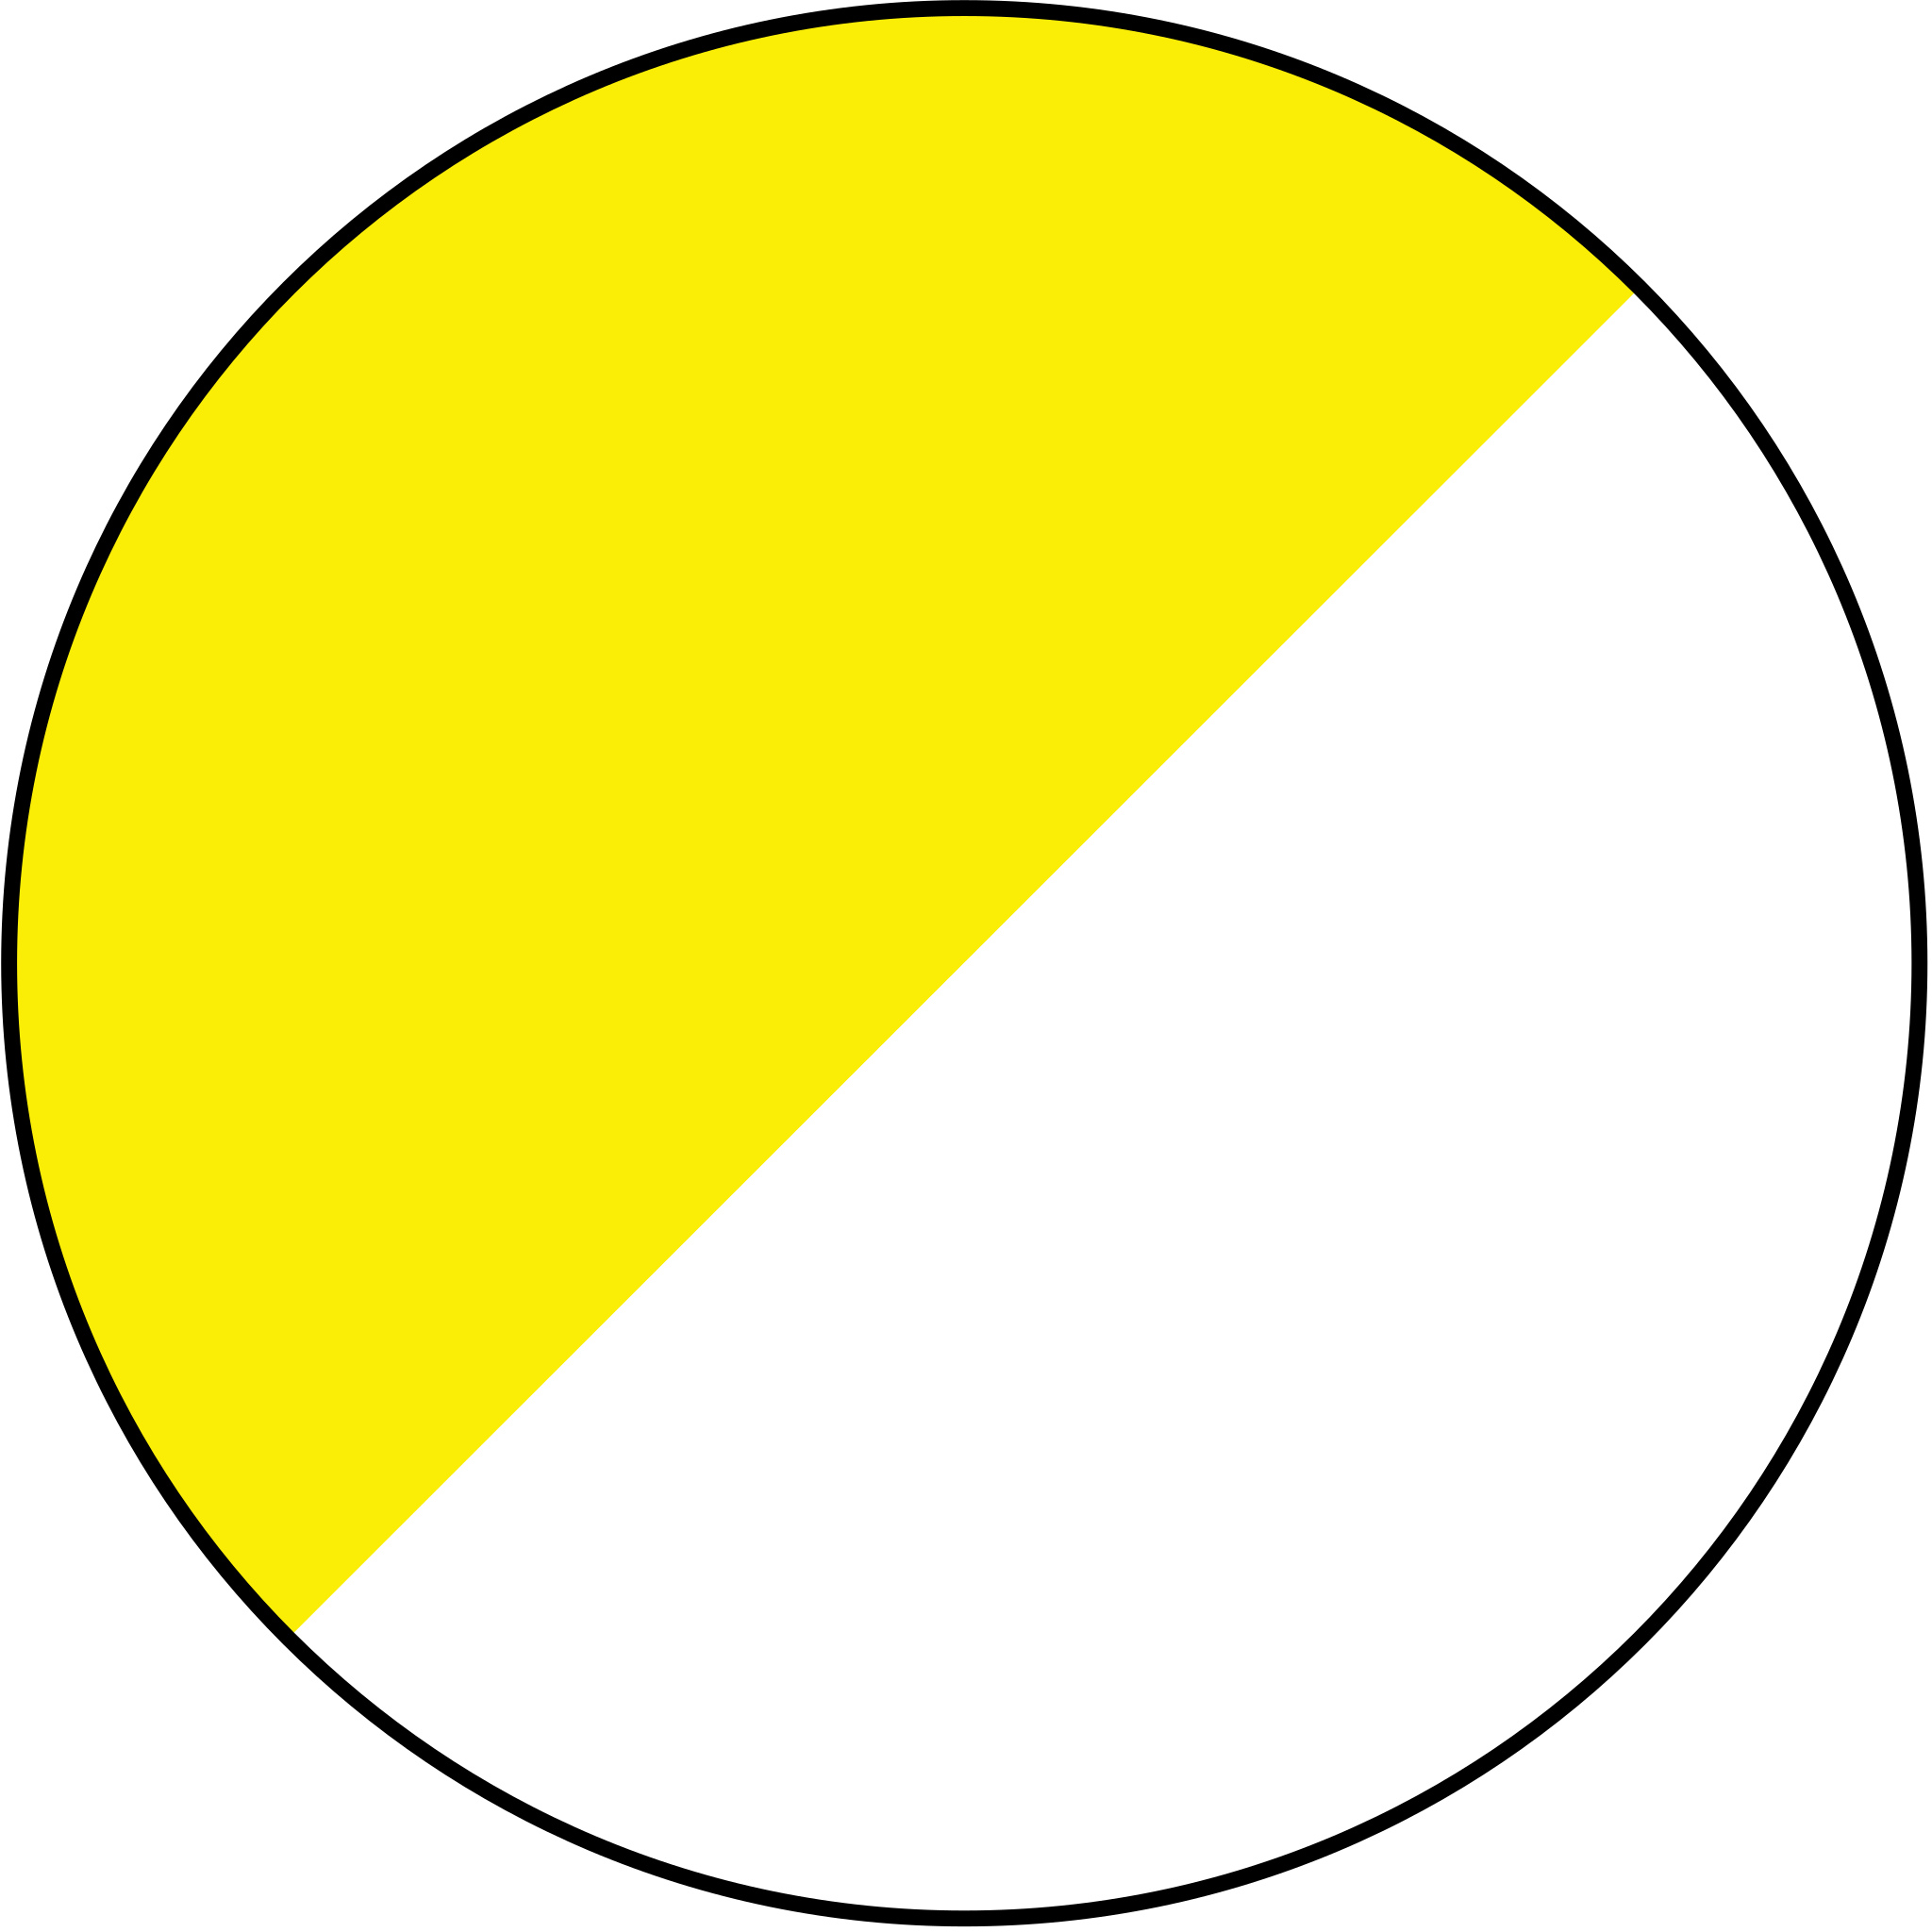 Желтый полукруг. Желтый полукруг на прозрачном фоне. Круг наполовину желтый. Полукруг желтого цвета. Половина